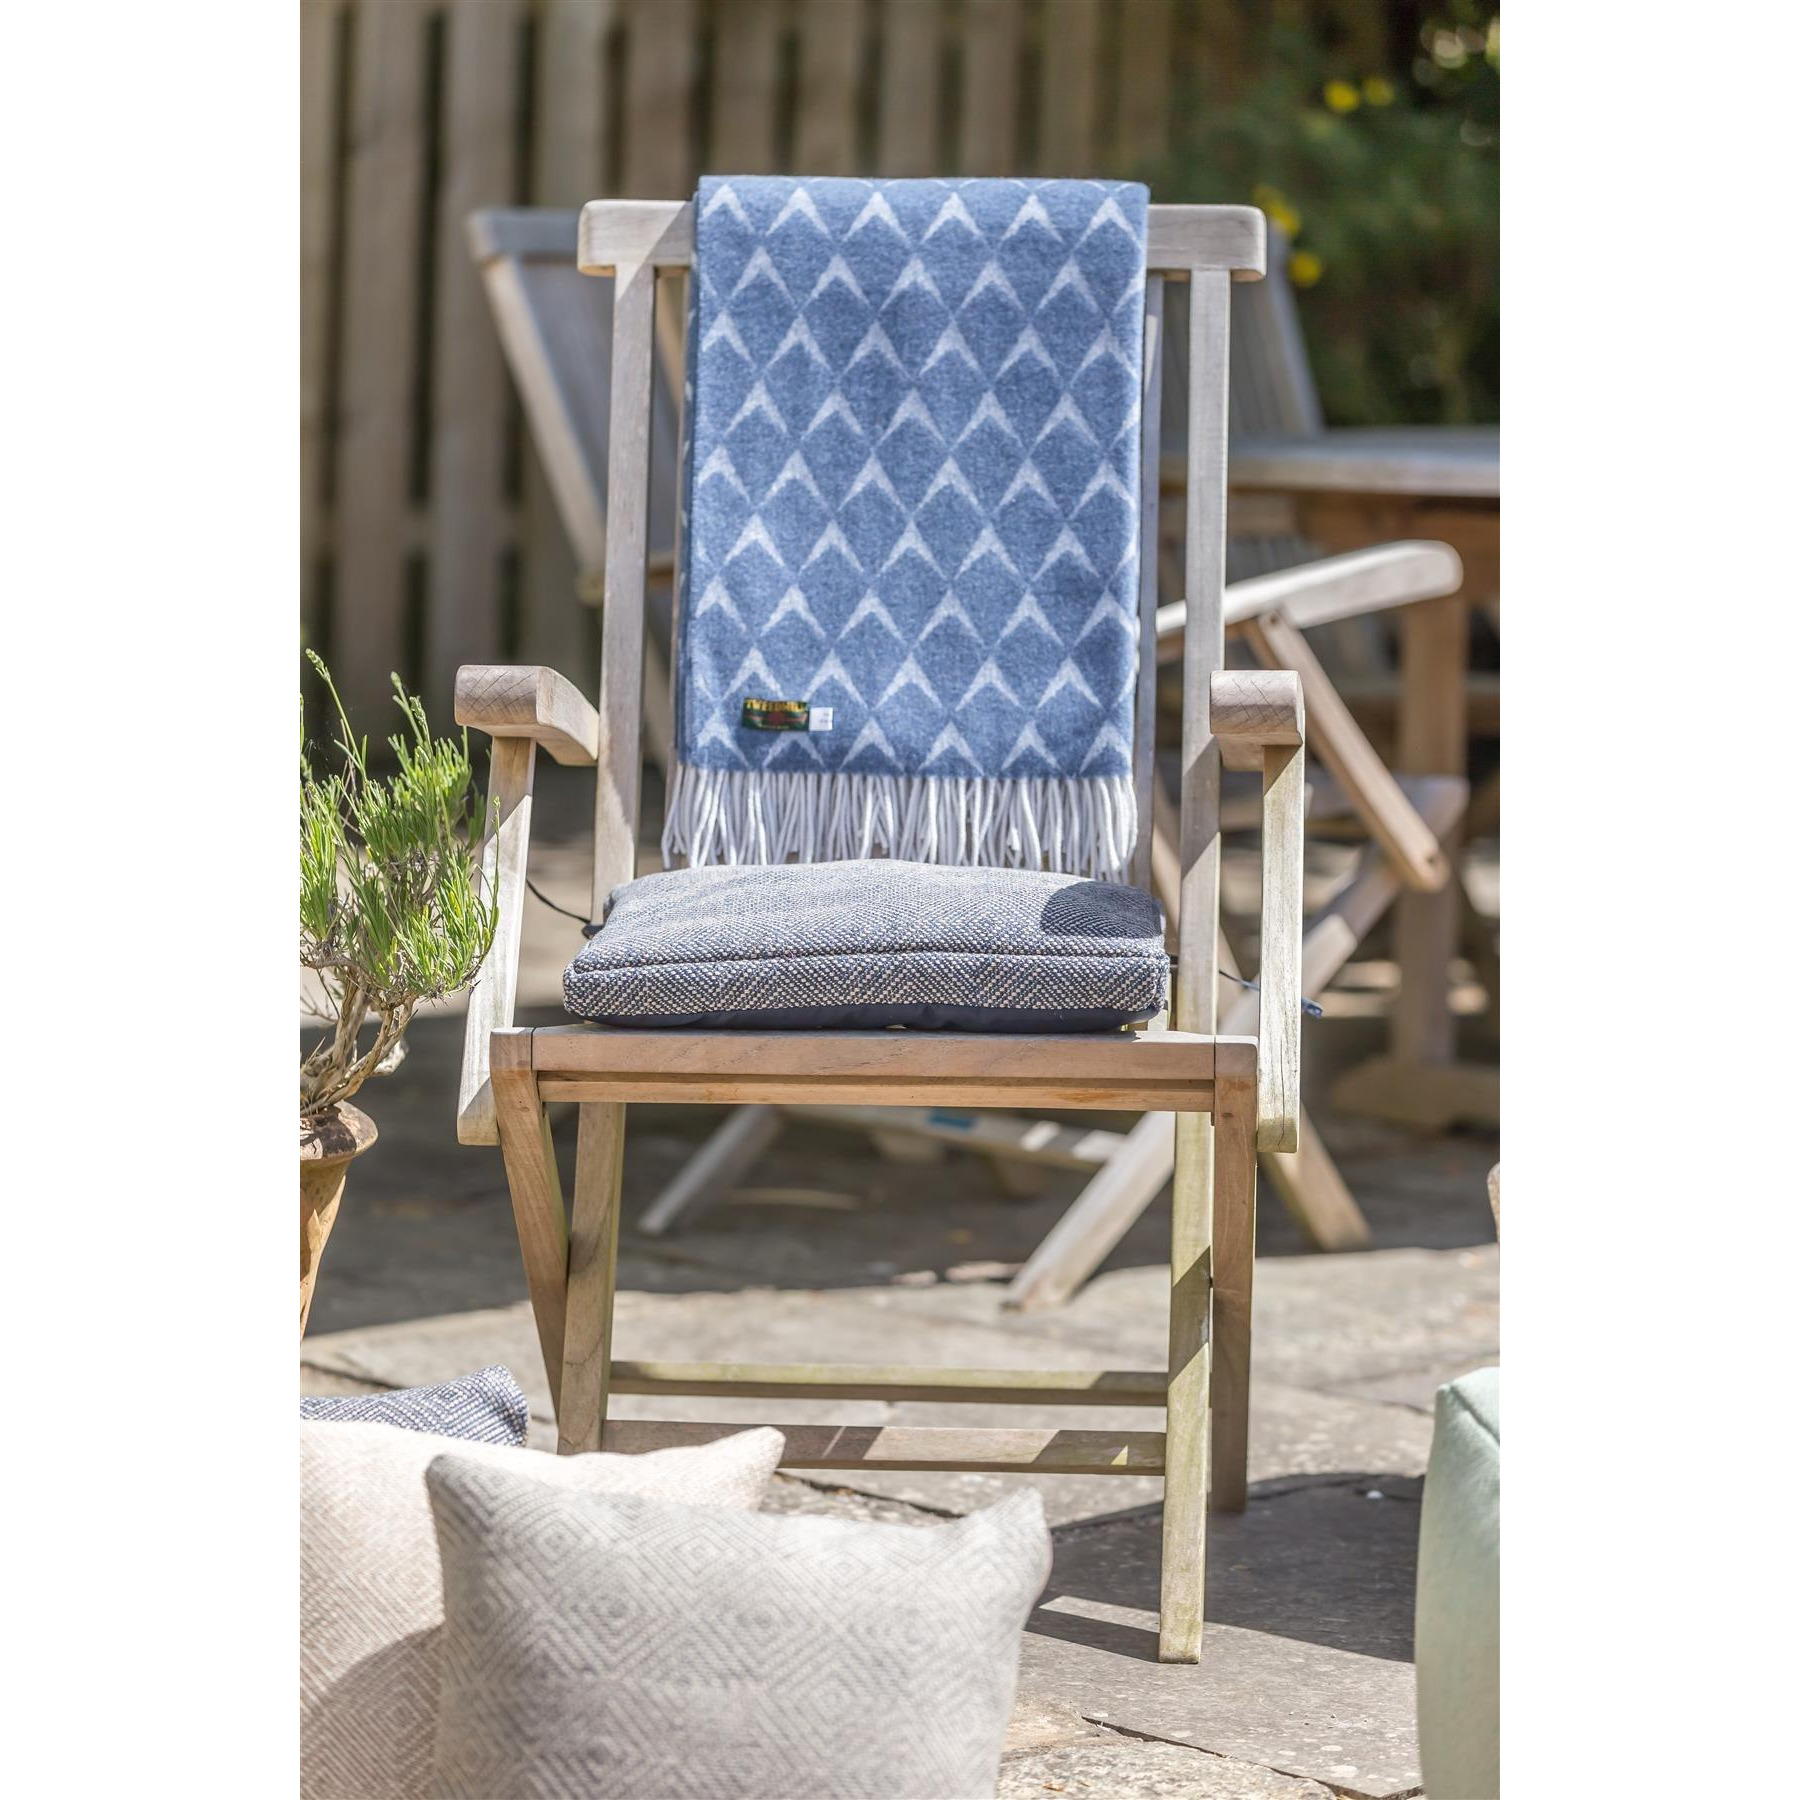 Tweedmill 100% Pure New Merino Wool Coastal Penrhos Blanket/Throw 142 x 180cm Made in the UK - image 1